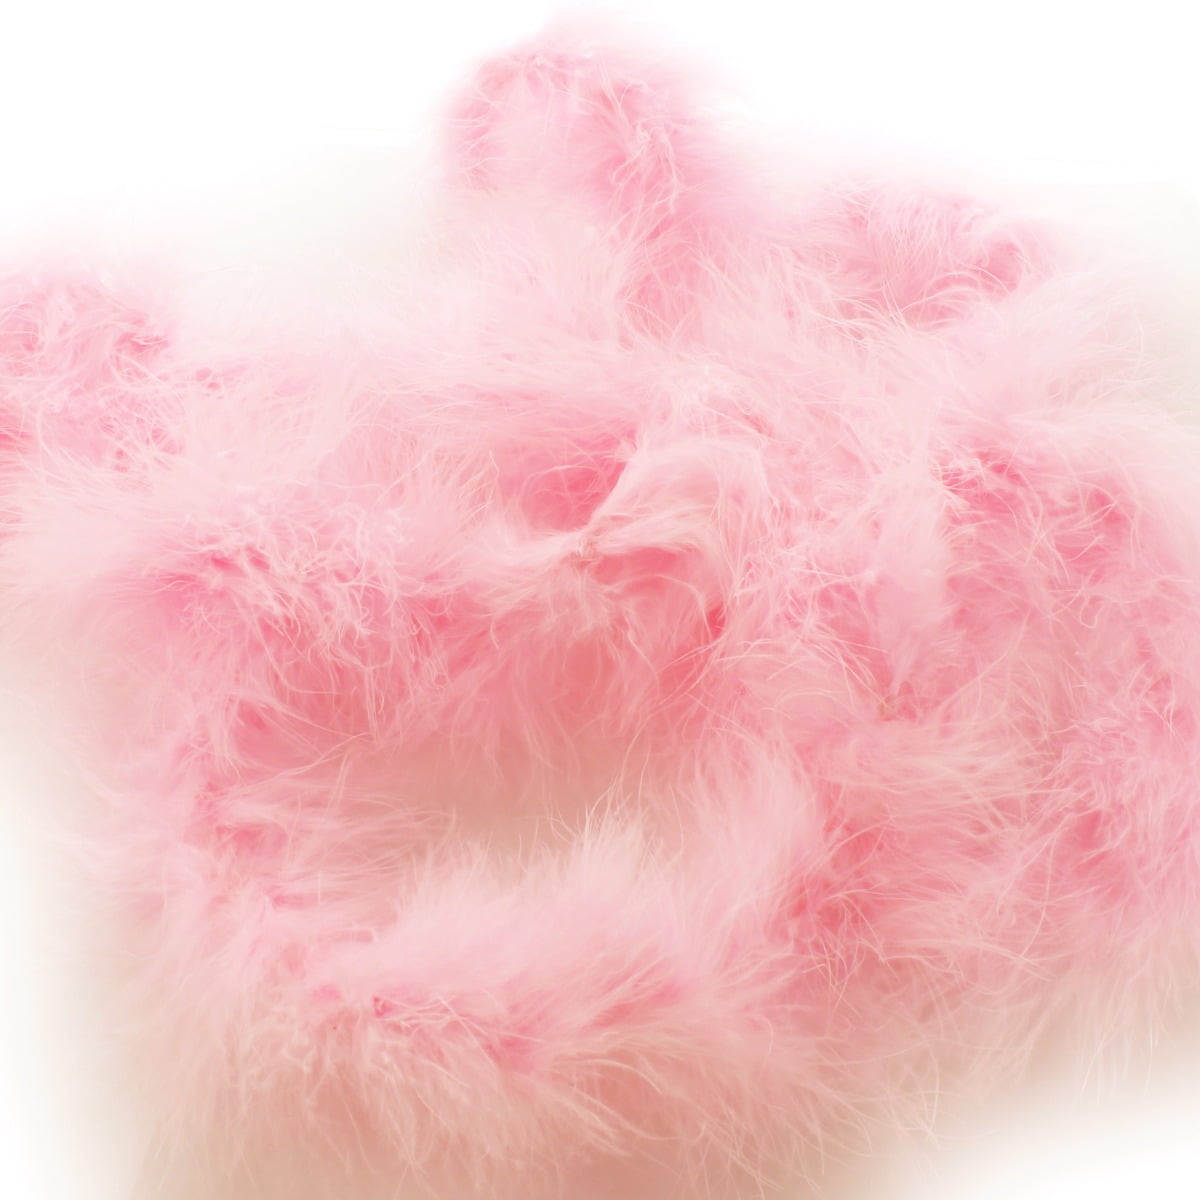 Full Marabou Feather Boa - 2 Yards - Light Pink 